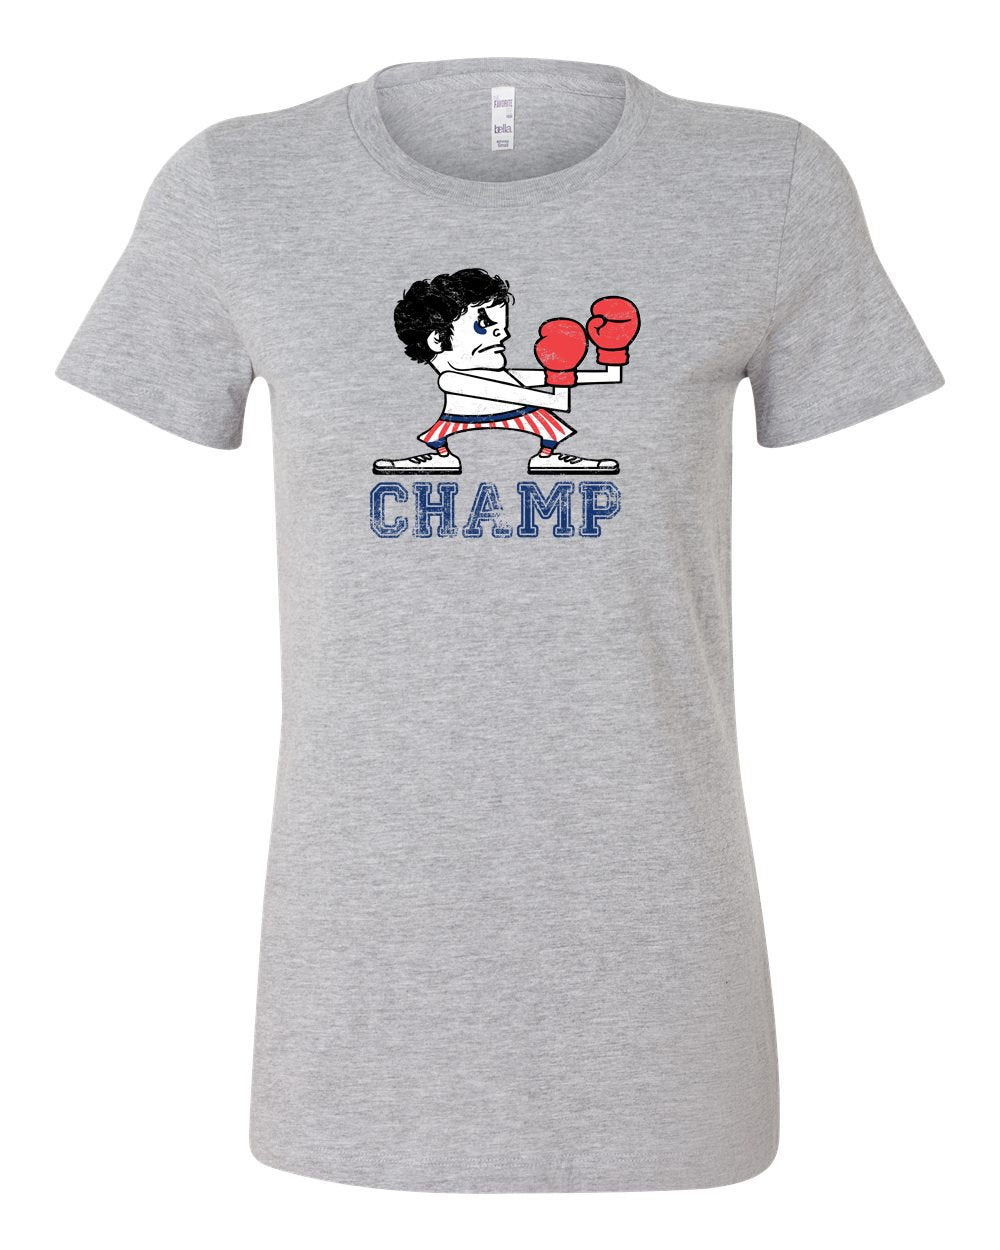 Champ LADIES Junior-Fit T-Shirt